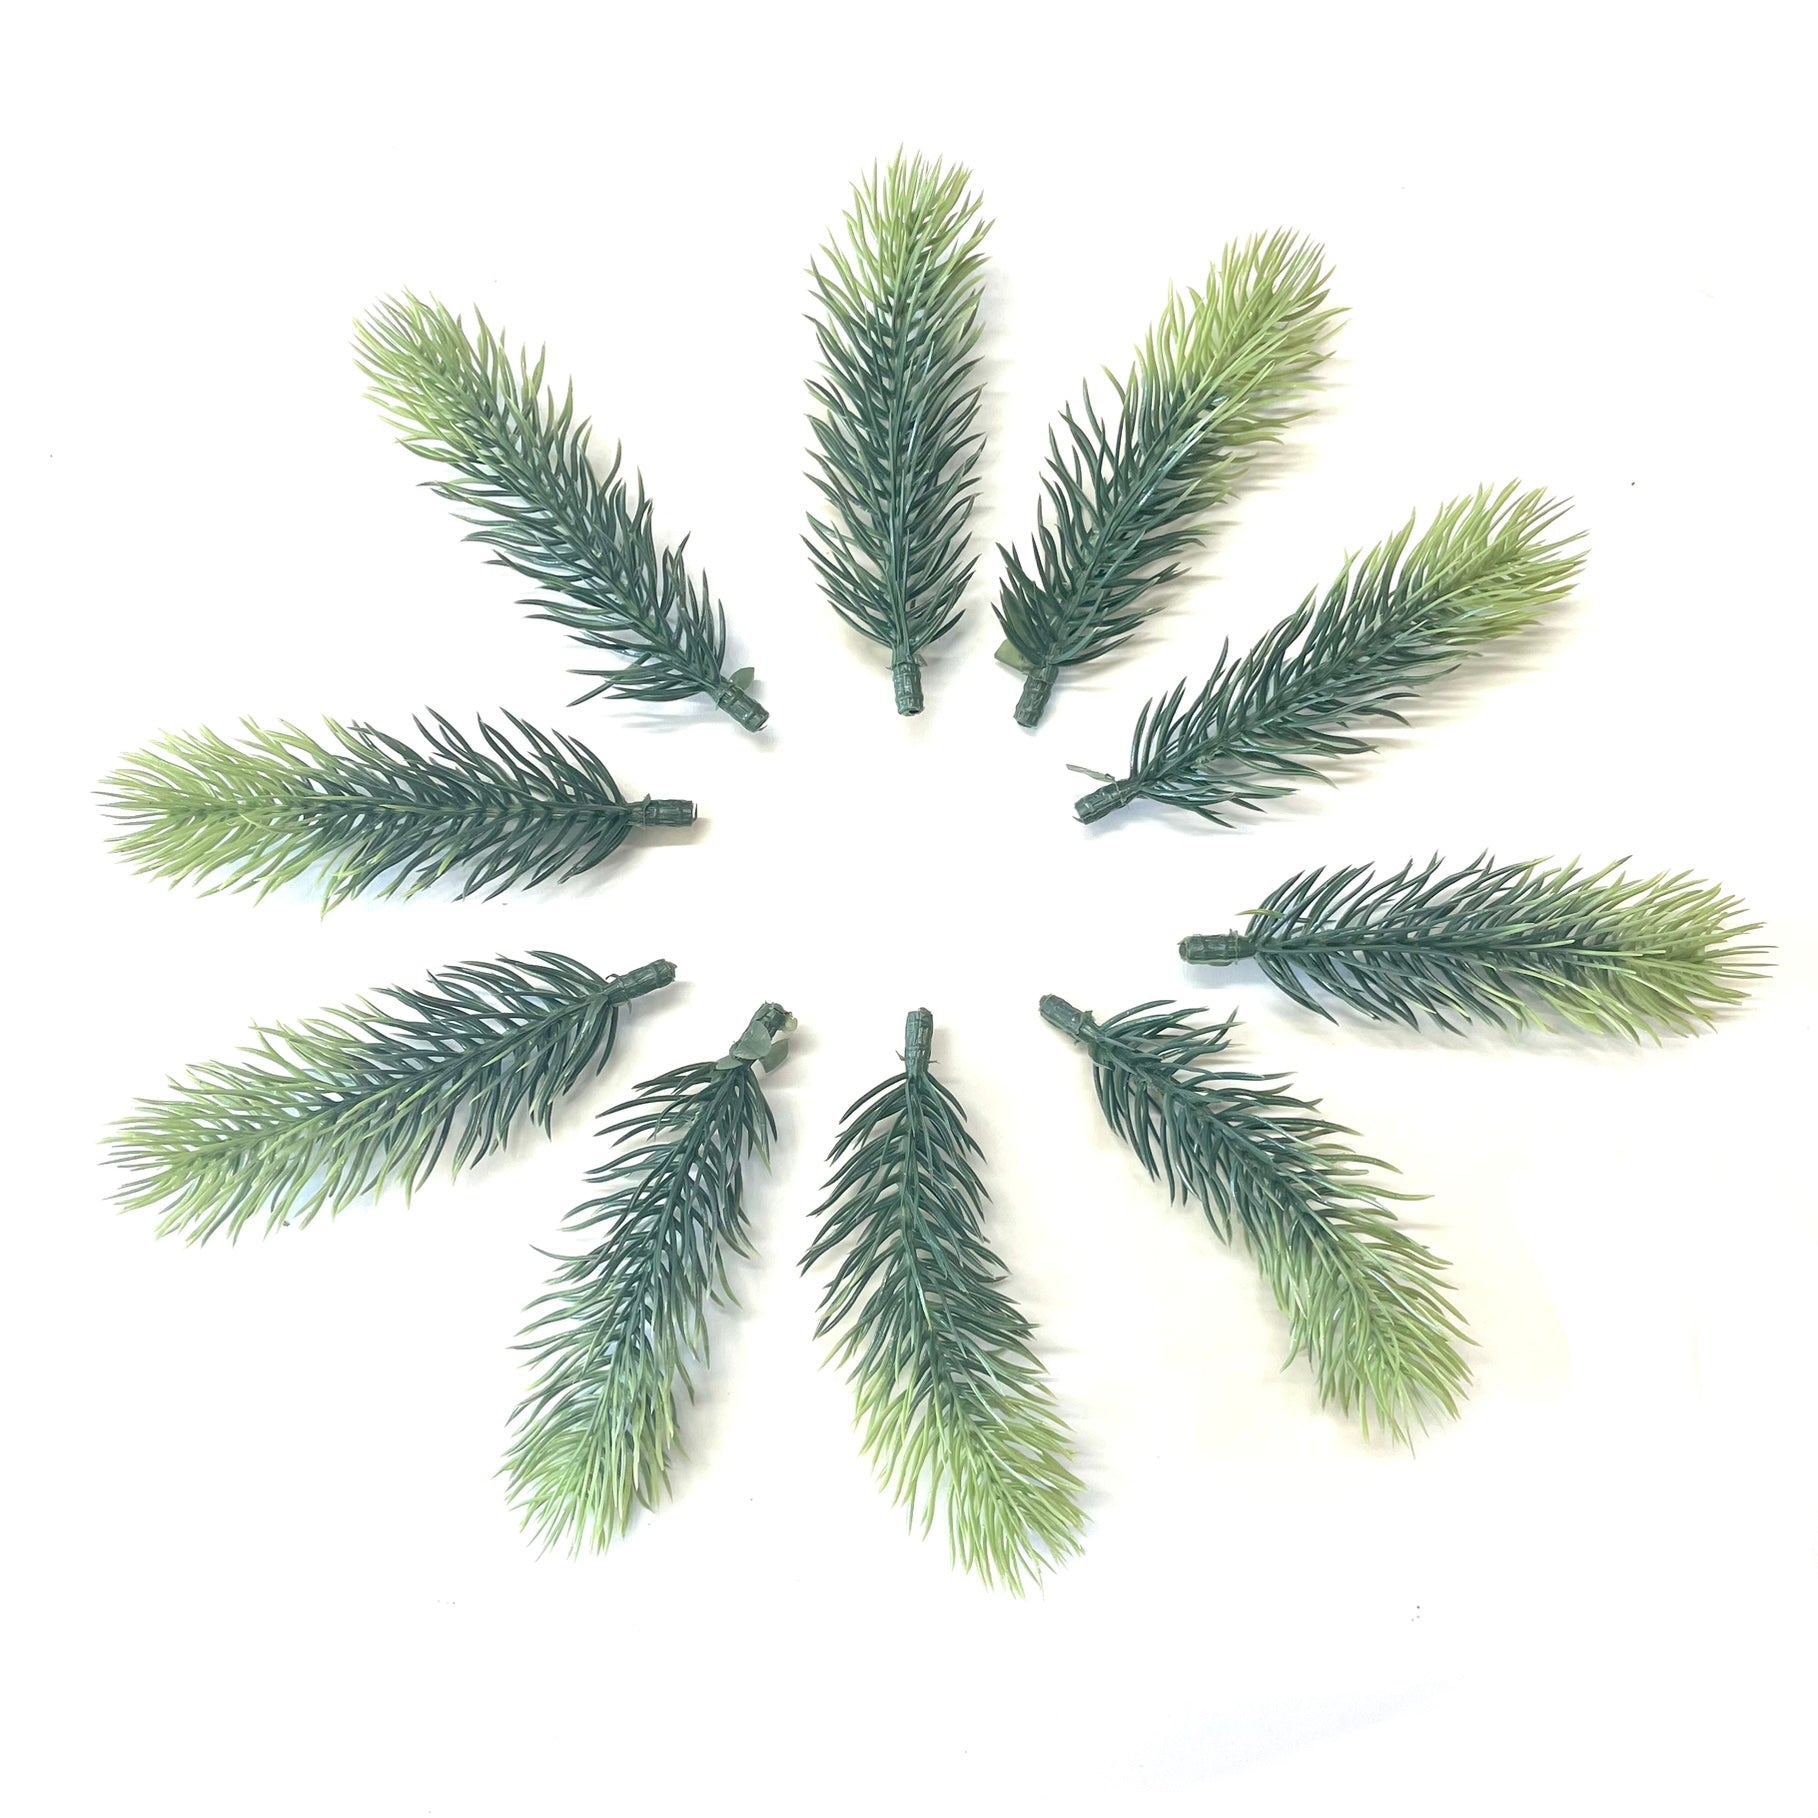 Artificial Christmas Pine Needle Picks x 10 pcs - Gradient Green (Style 1)